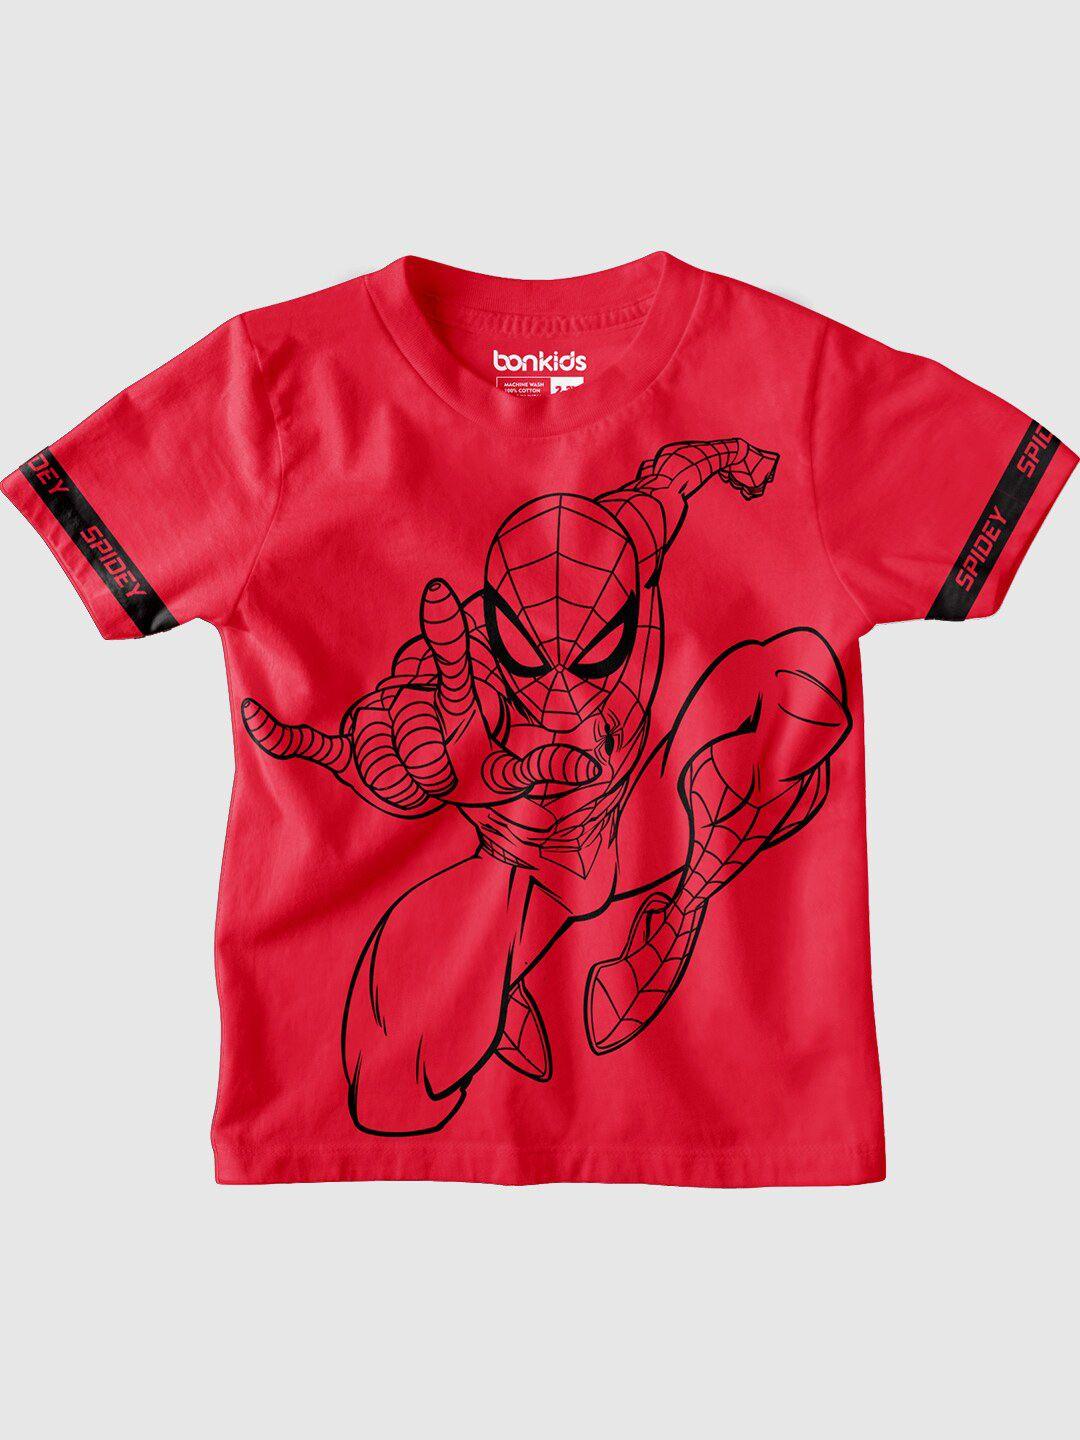 bonkids-boys-spider-man-printed-cotton-casual-t-shirt